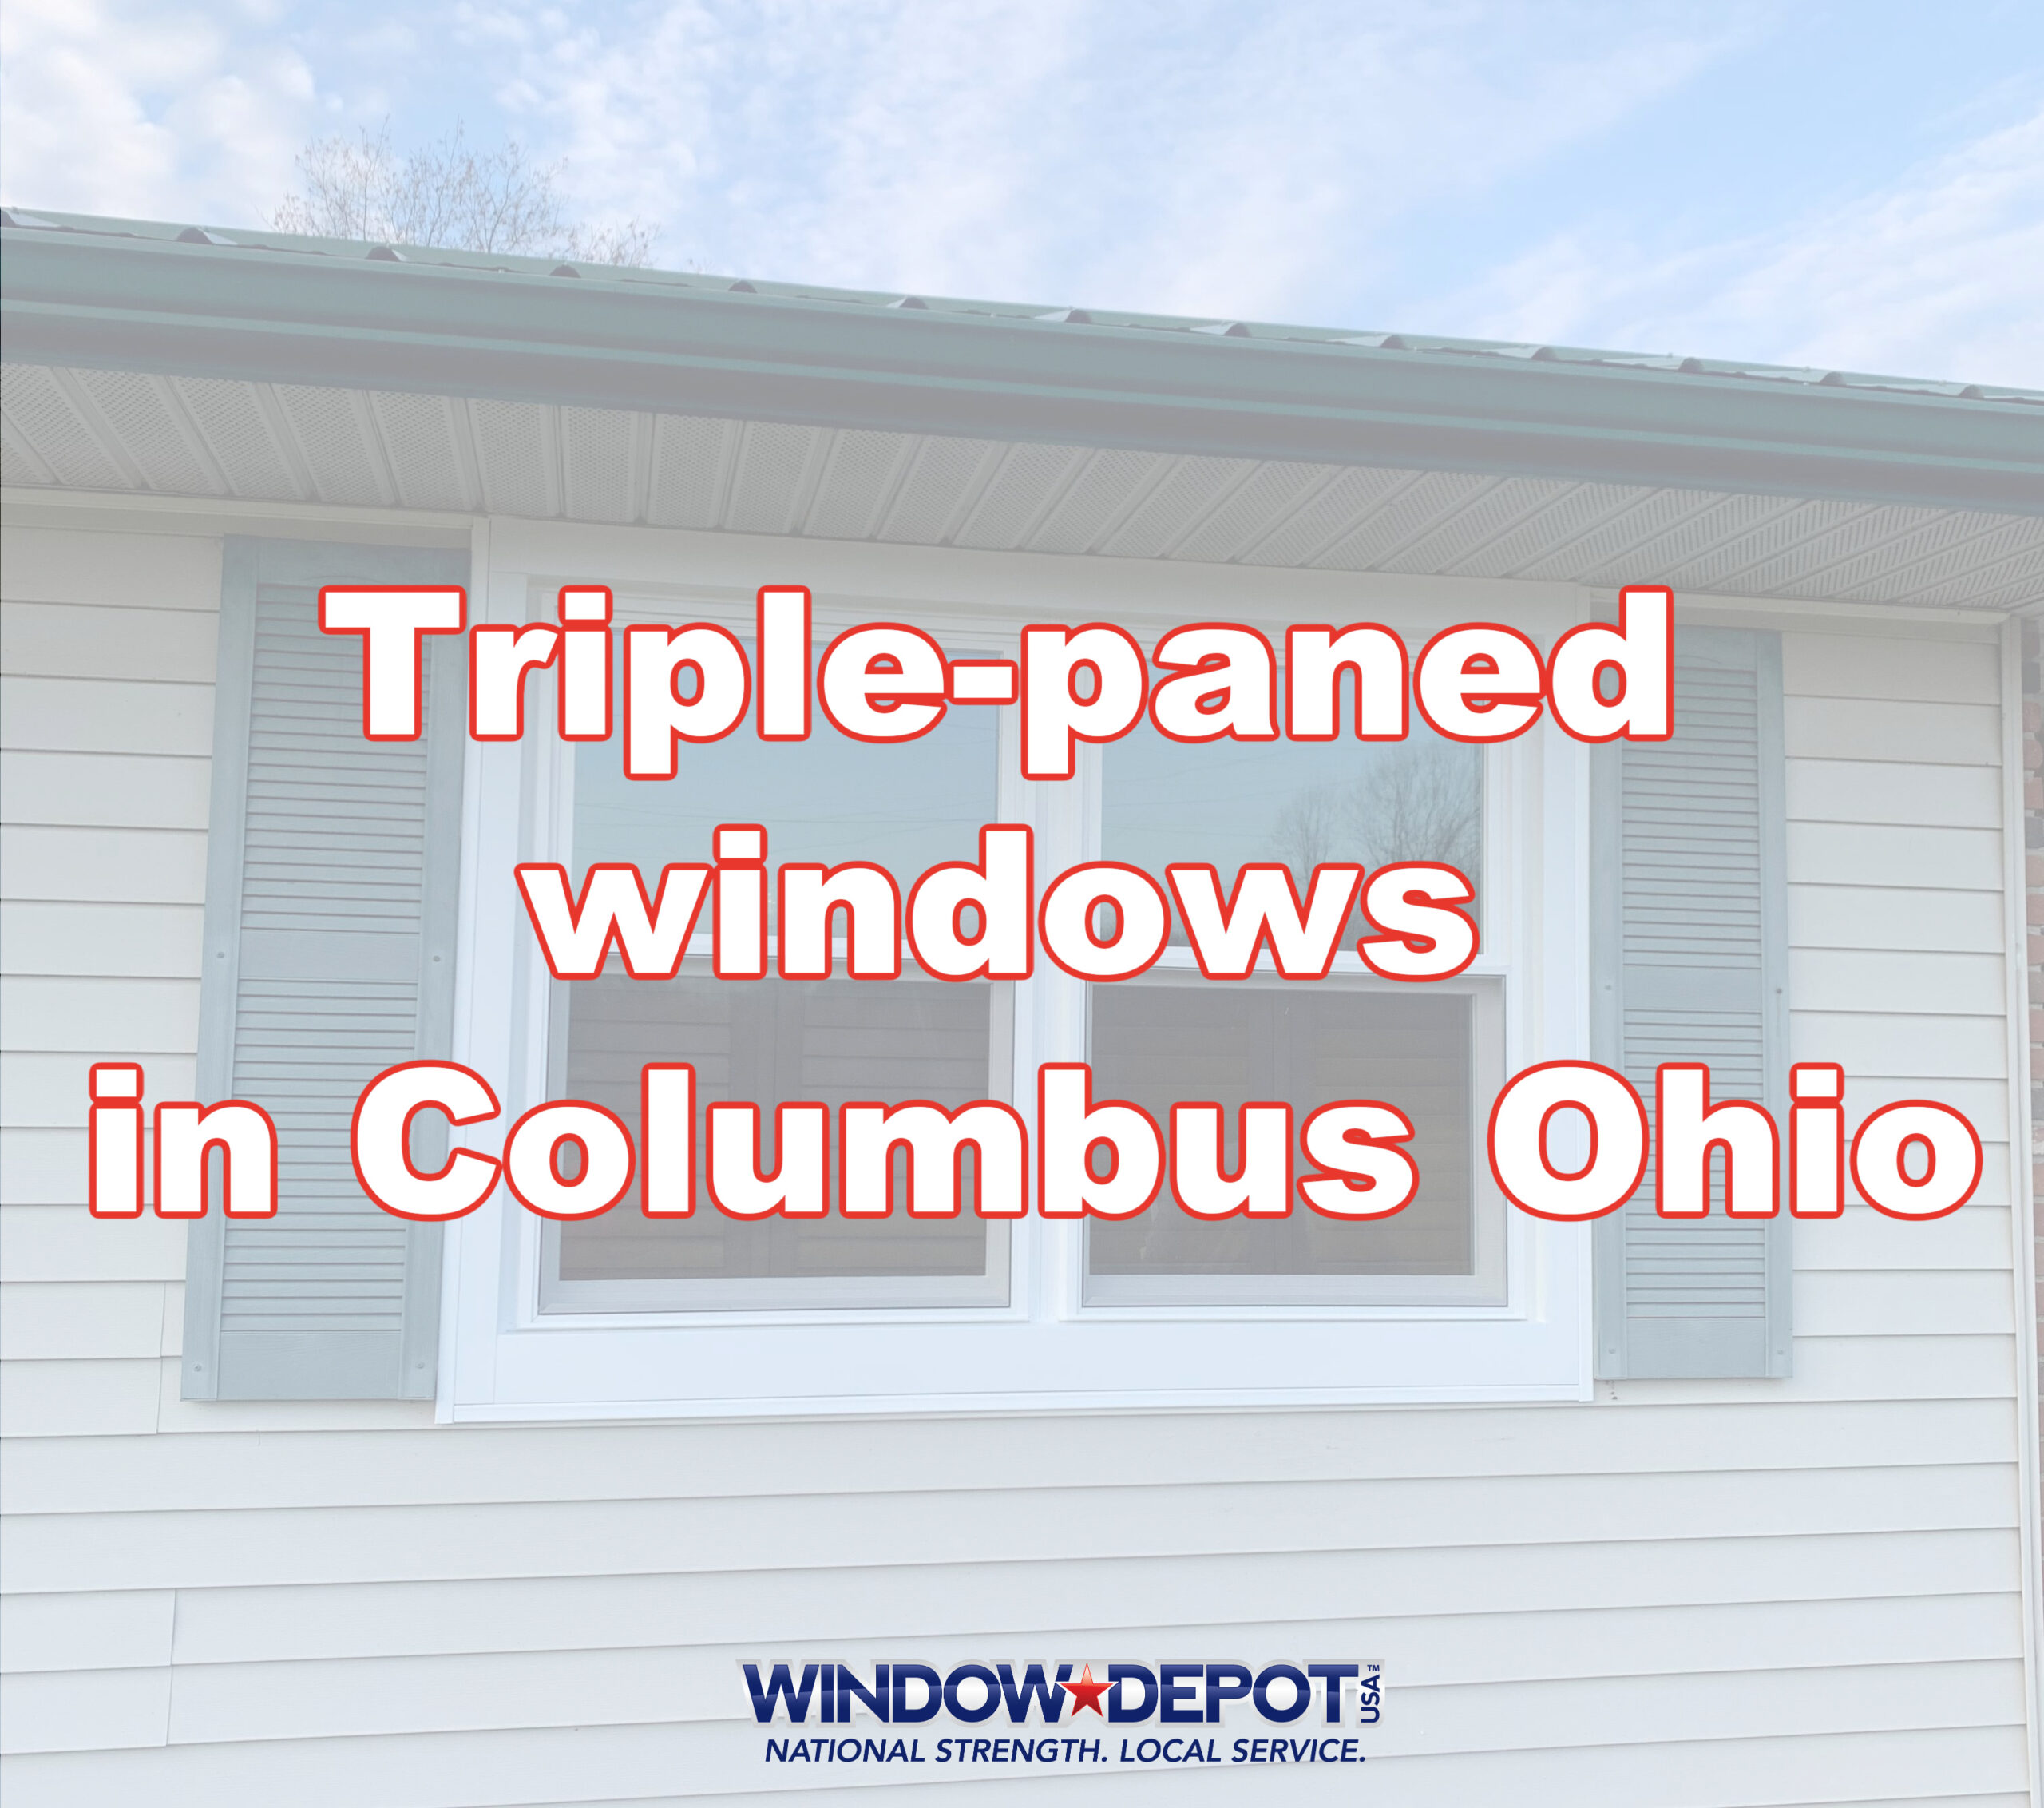 Triple-paned windows in Columbus Ohio